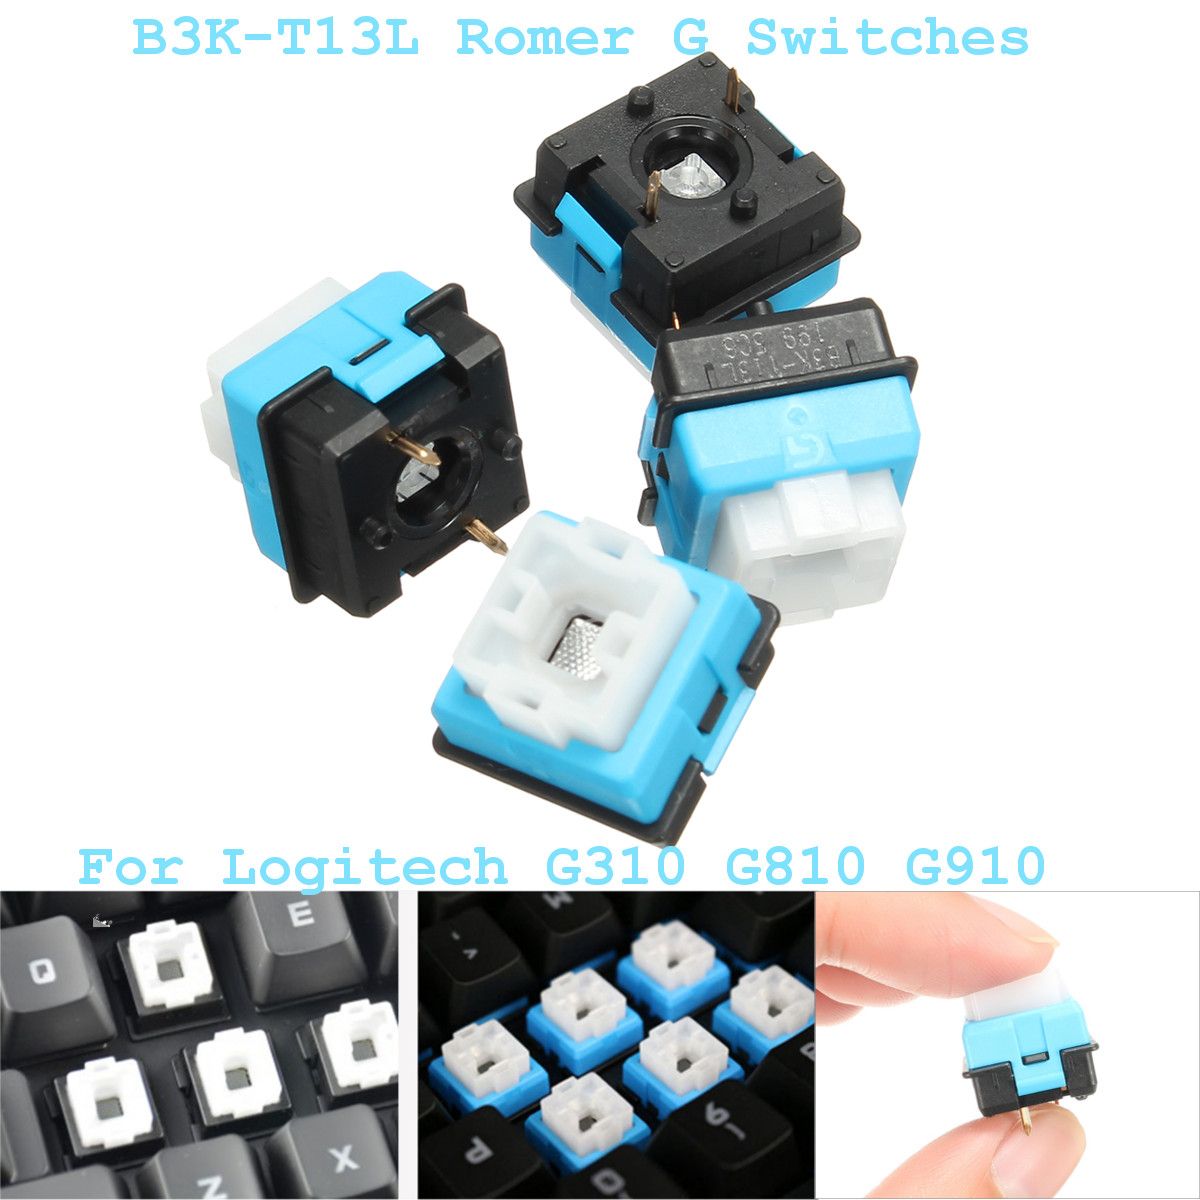 4pcs-B3K-T13L-Romer-G-Keyboard-Switches-for-Logitech-G310-G810-G910-RGB-1205086